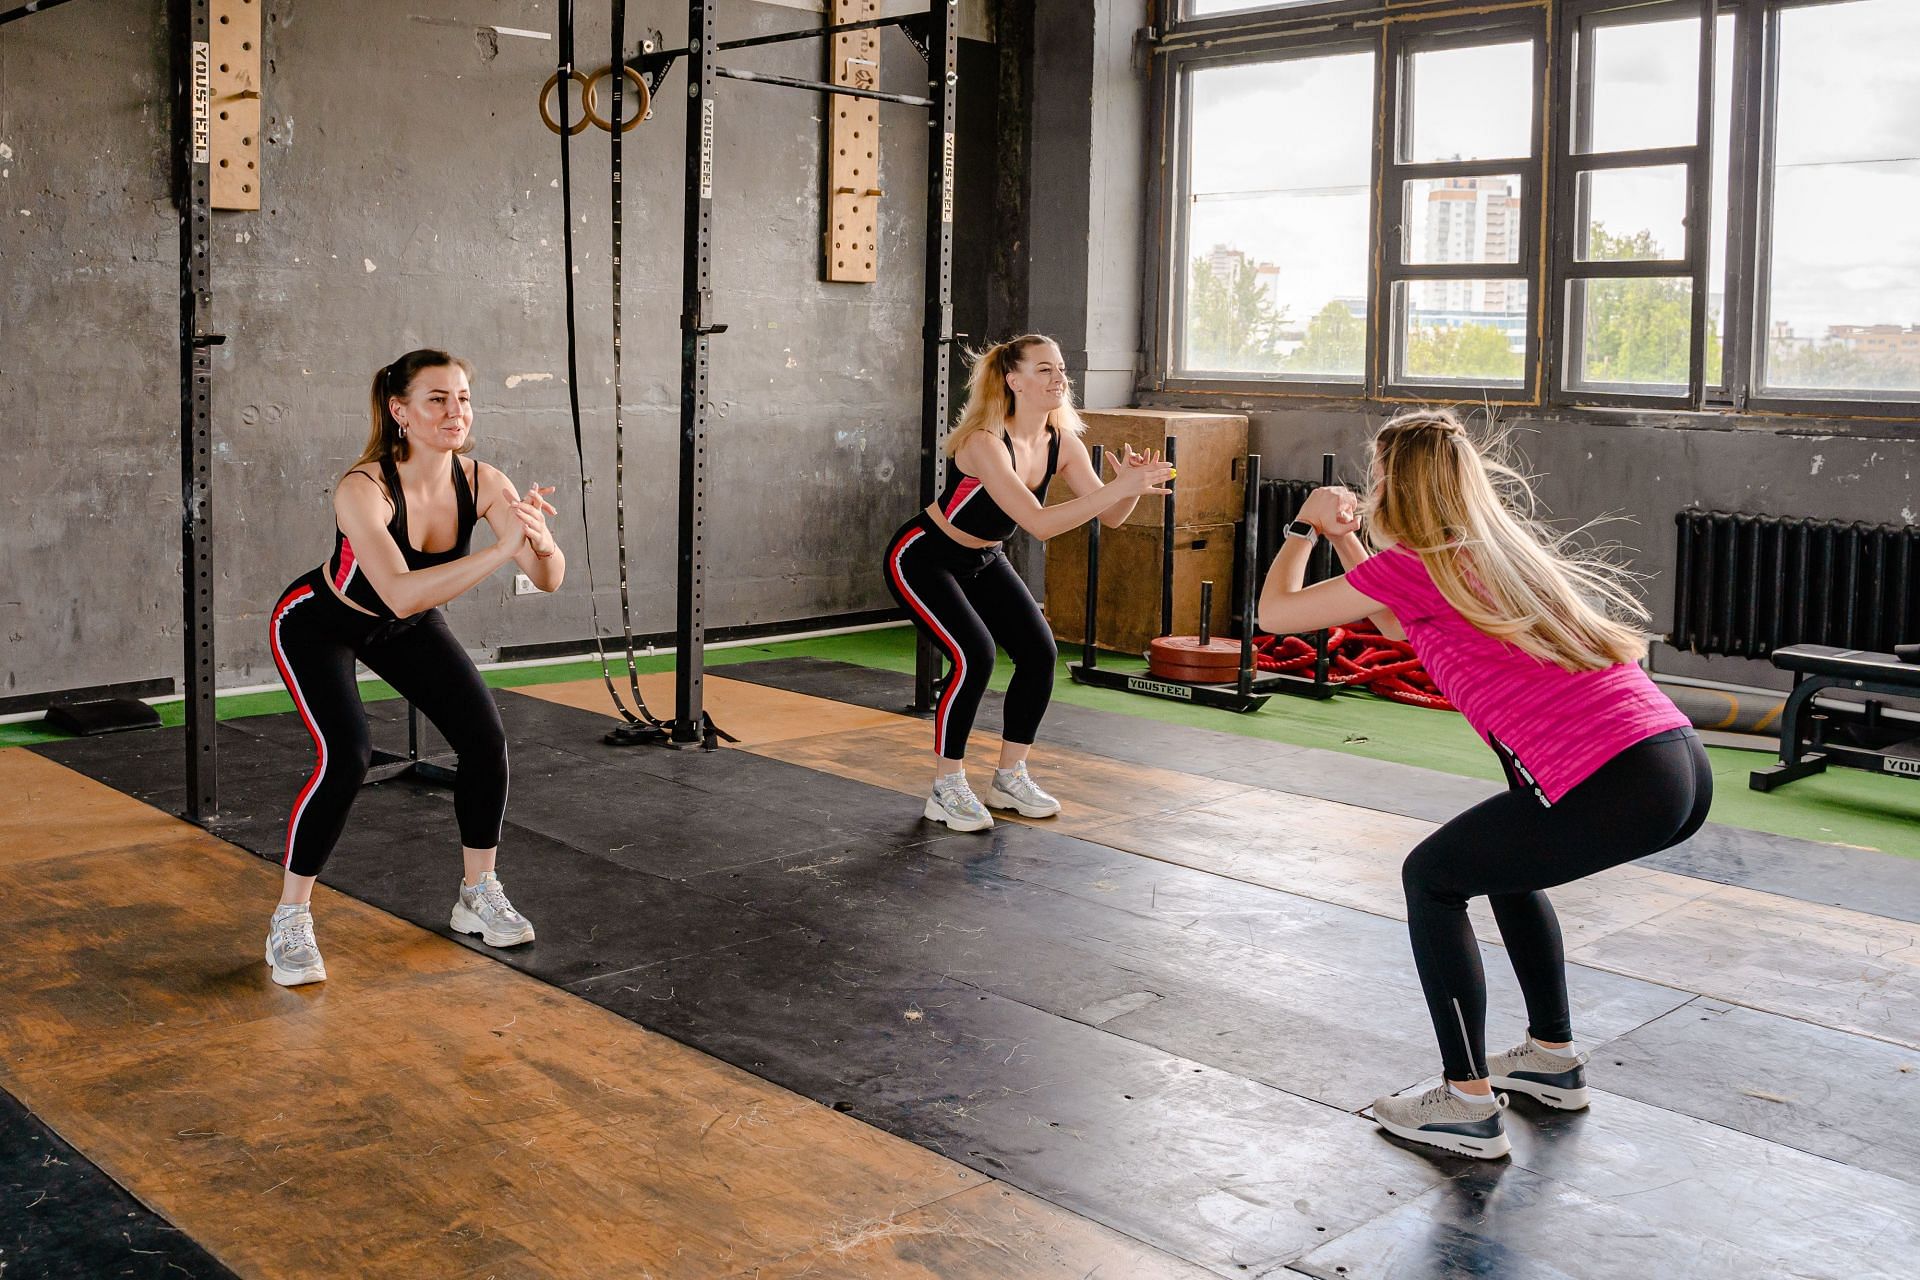 Cossack squat helps in improving hip mobility. (Image via Pexels/ Antoni Shkraba)